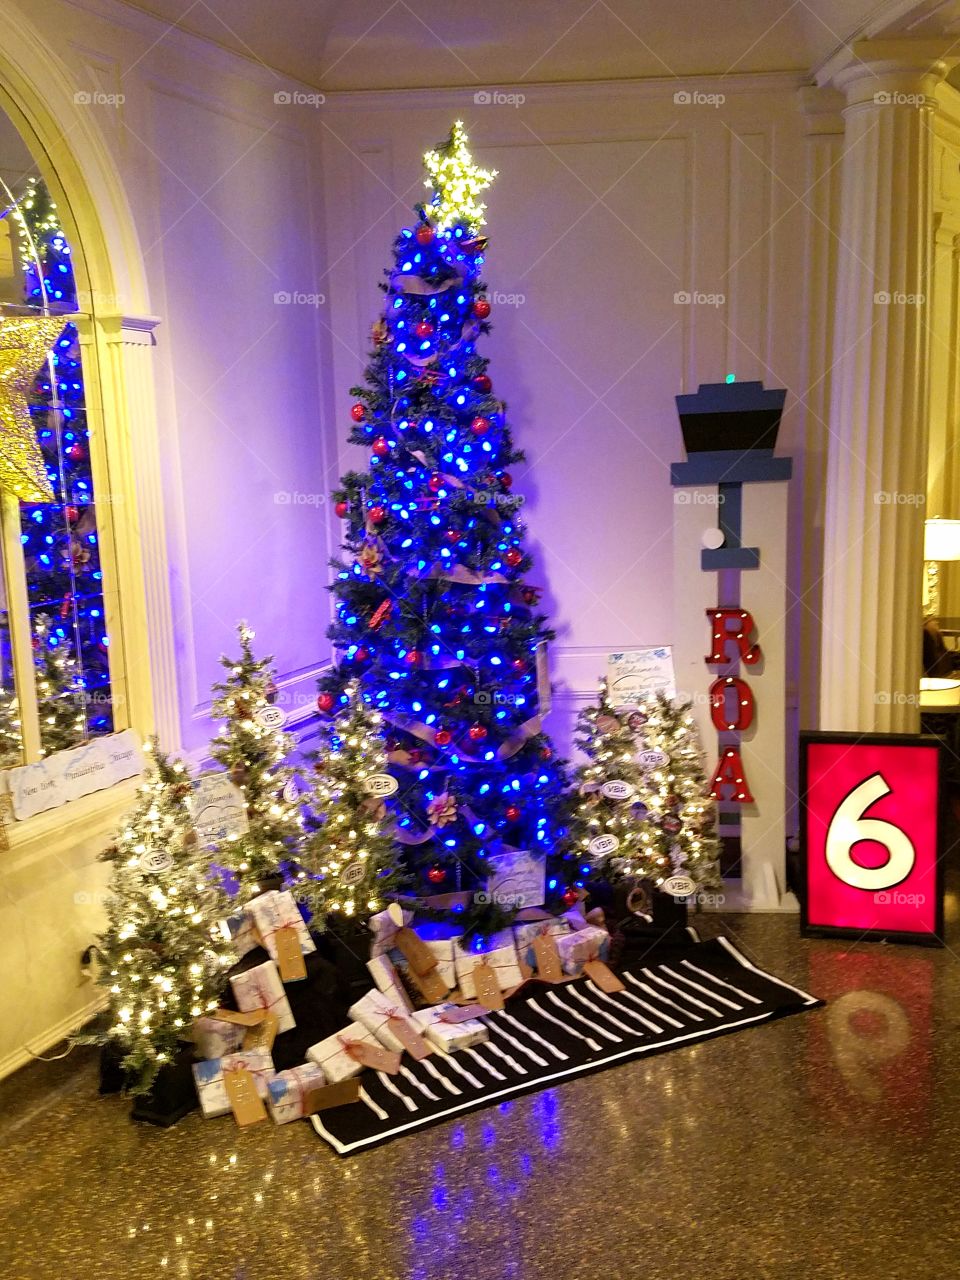 Roanoke ROA airport themed Christmas tree